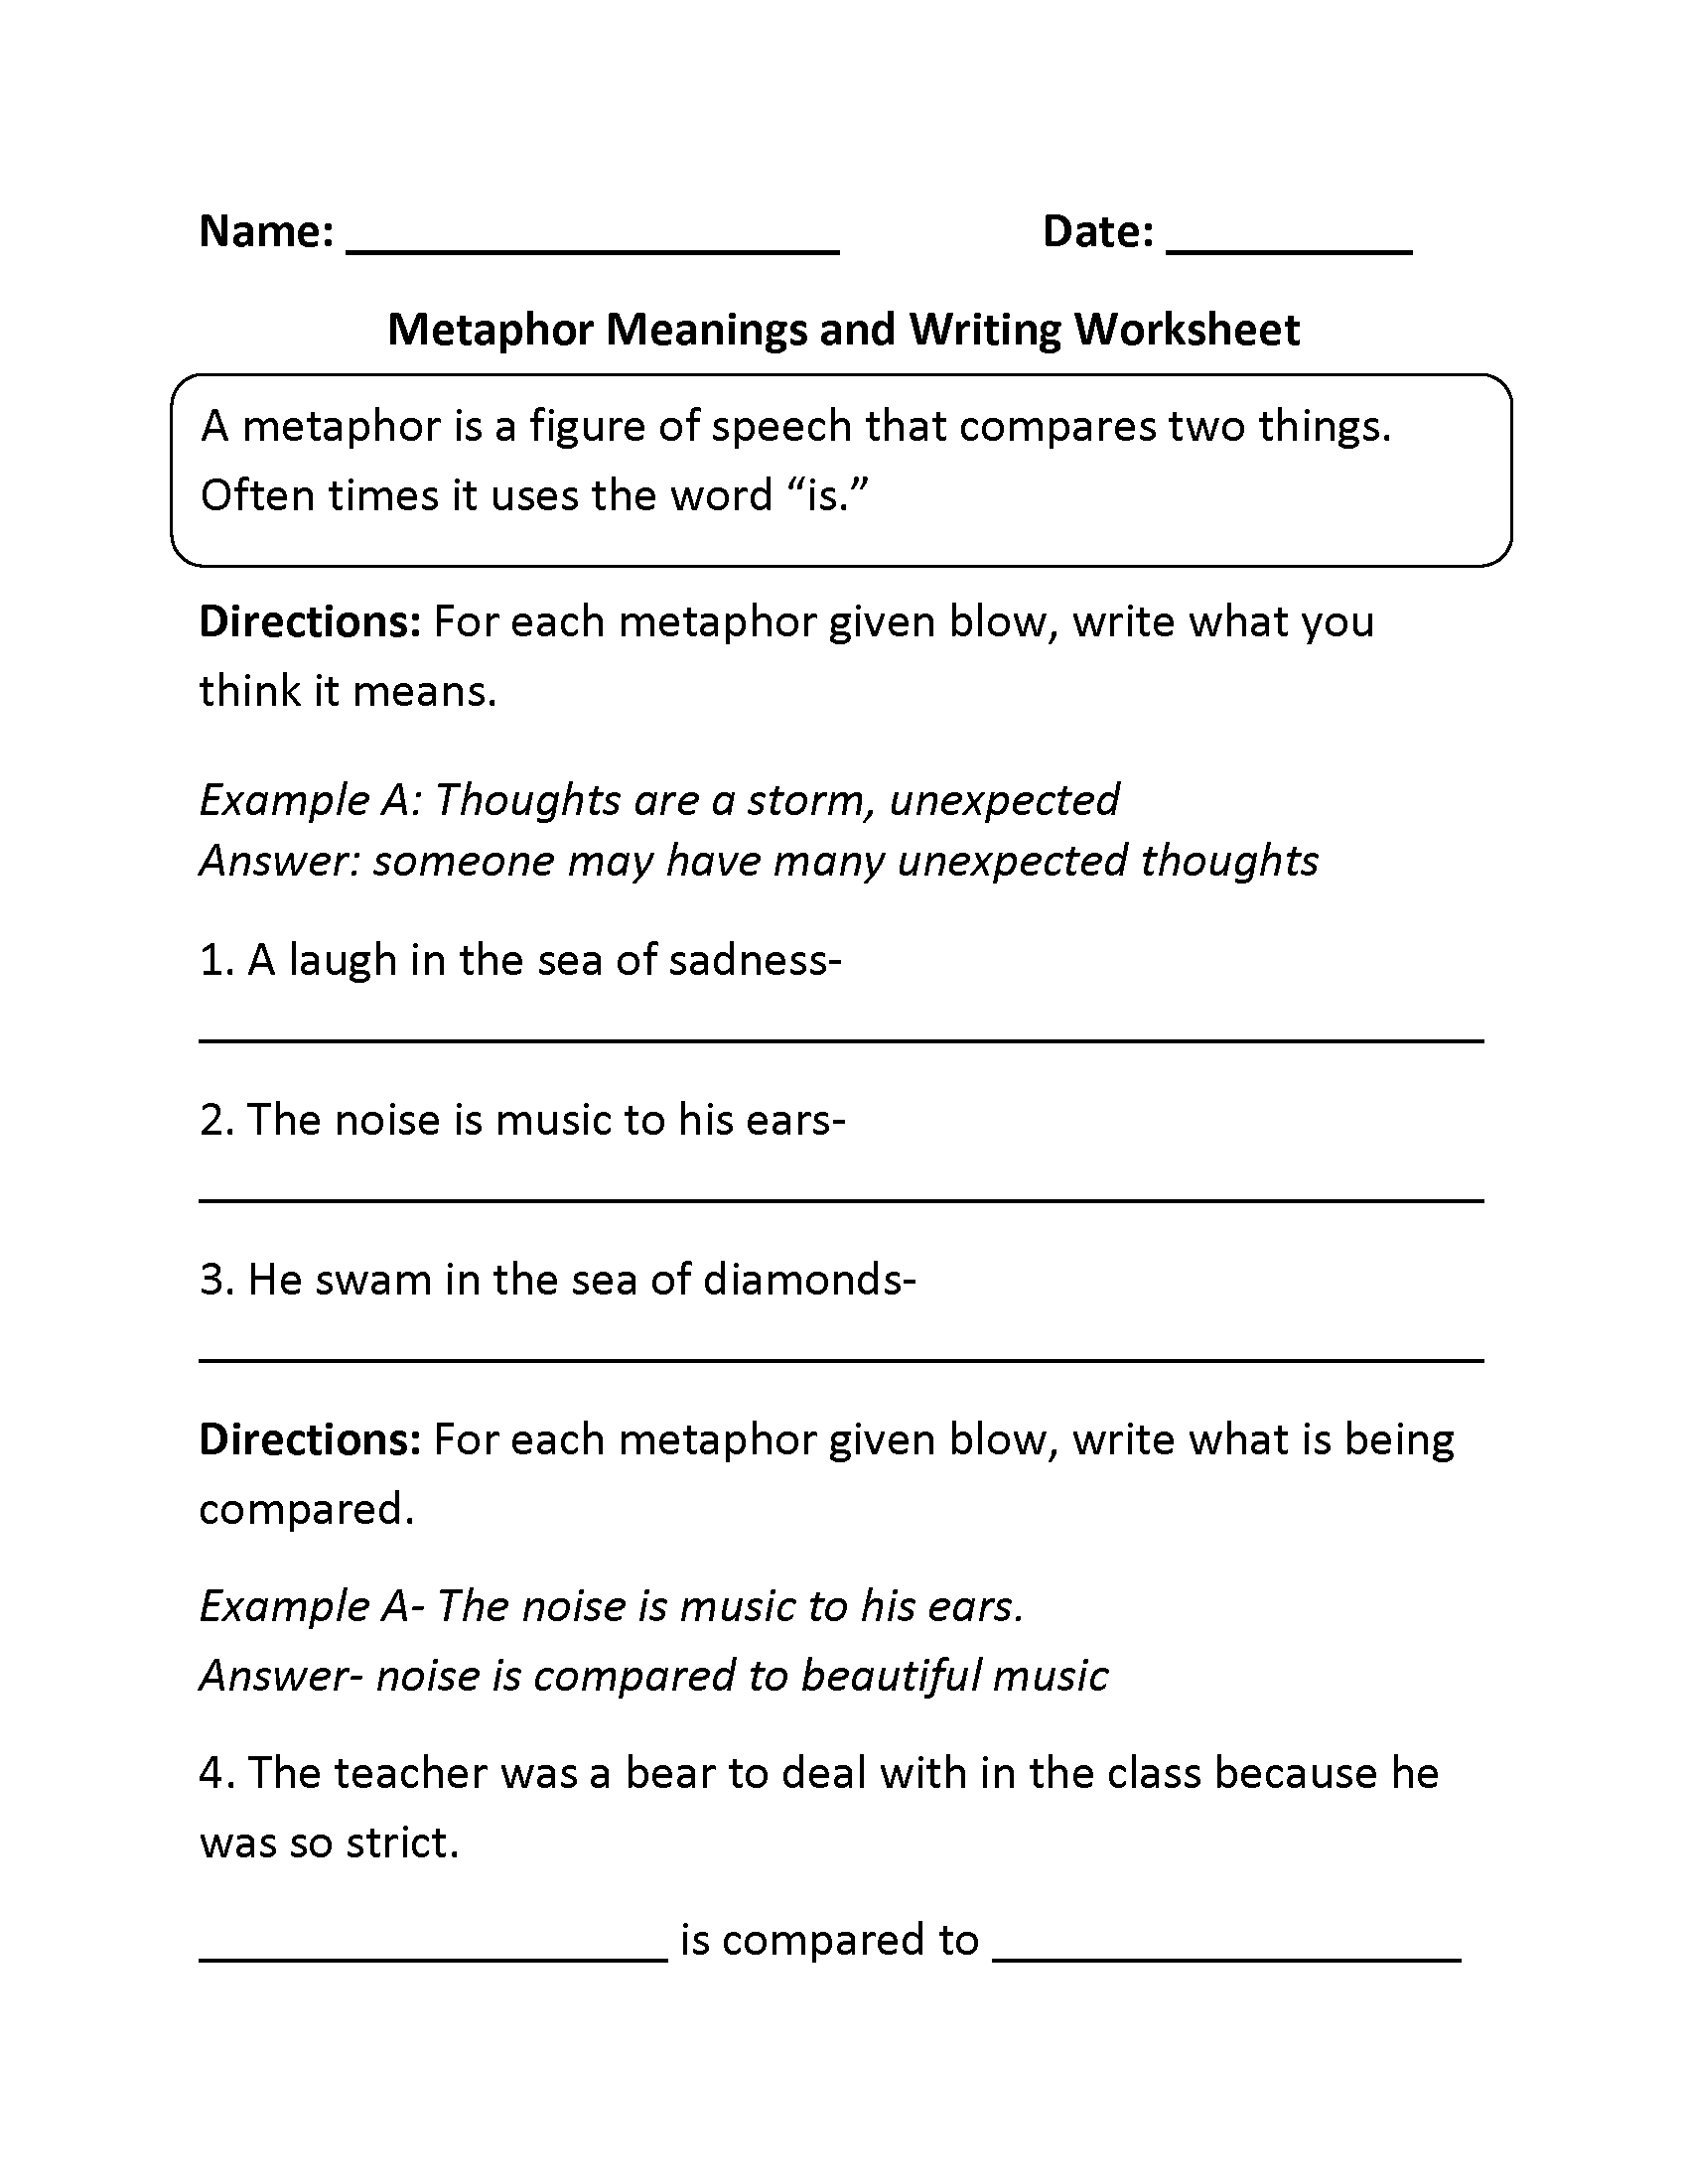 Metaphors Worksheets Comparing and Meanings Metaphors Worksheet